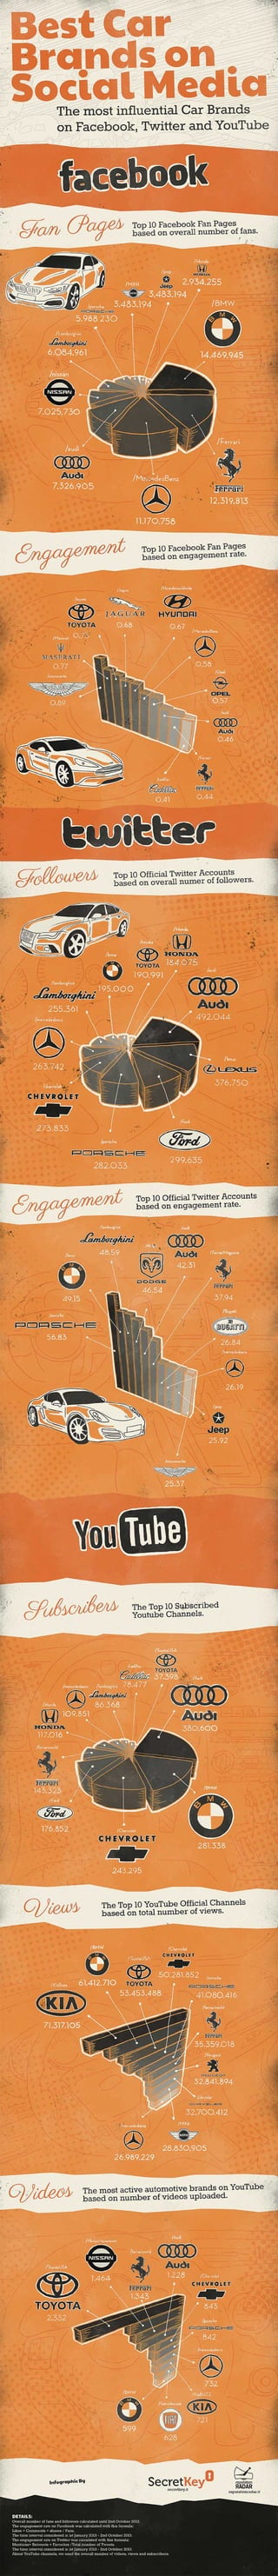 Best car brands on Social Media